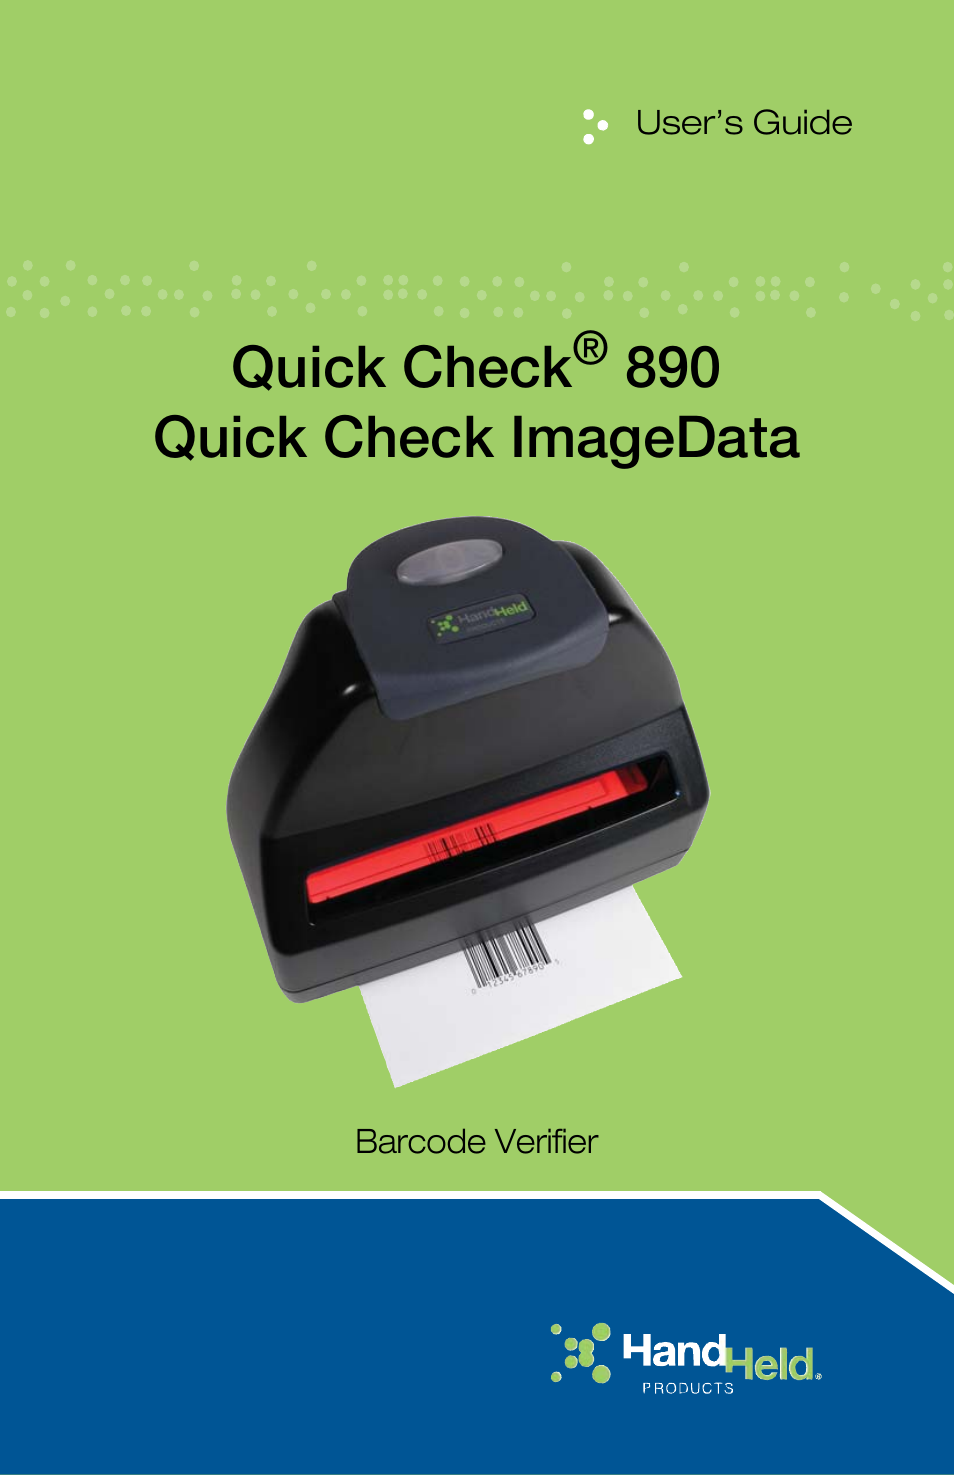 Quick Check ImageData Barcode Verifier Quick Check 890